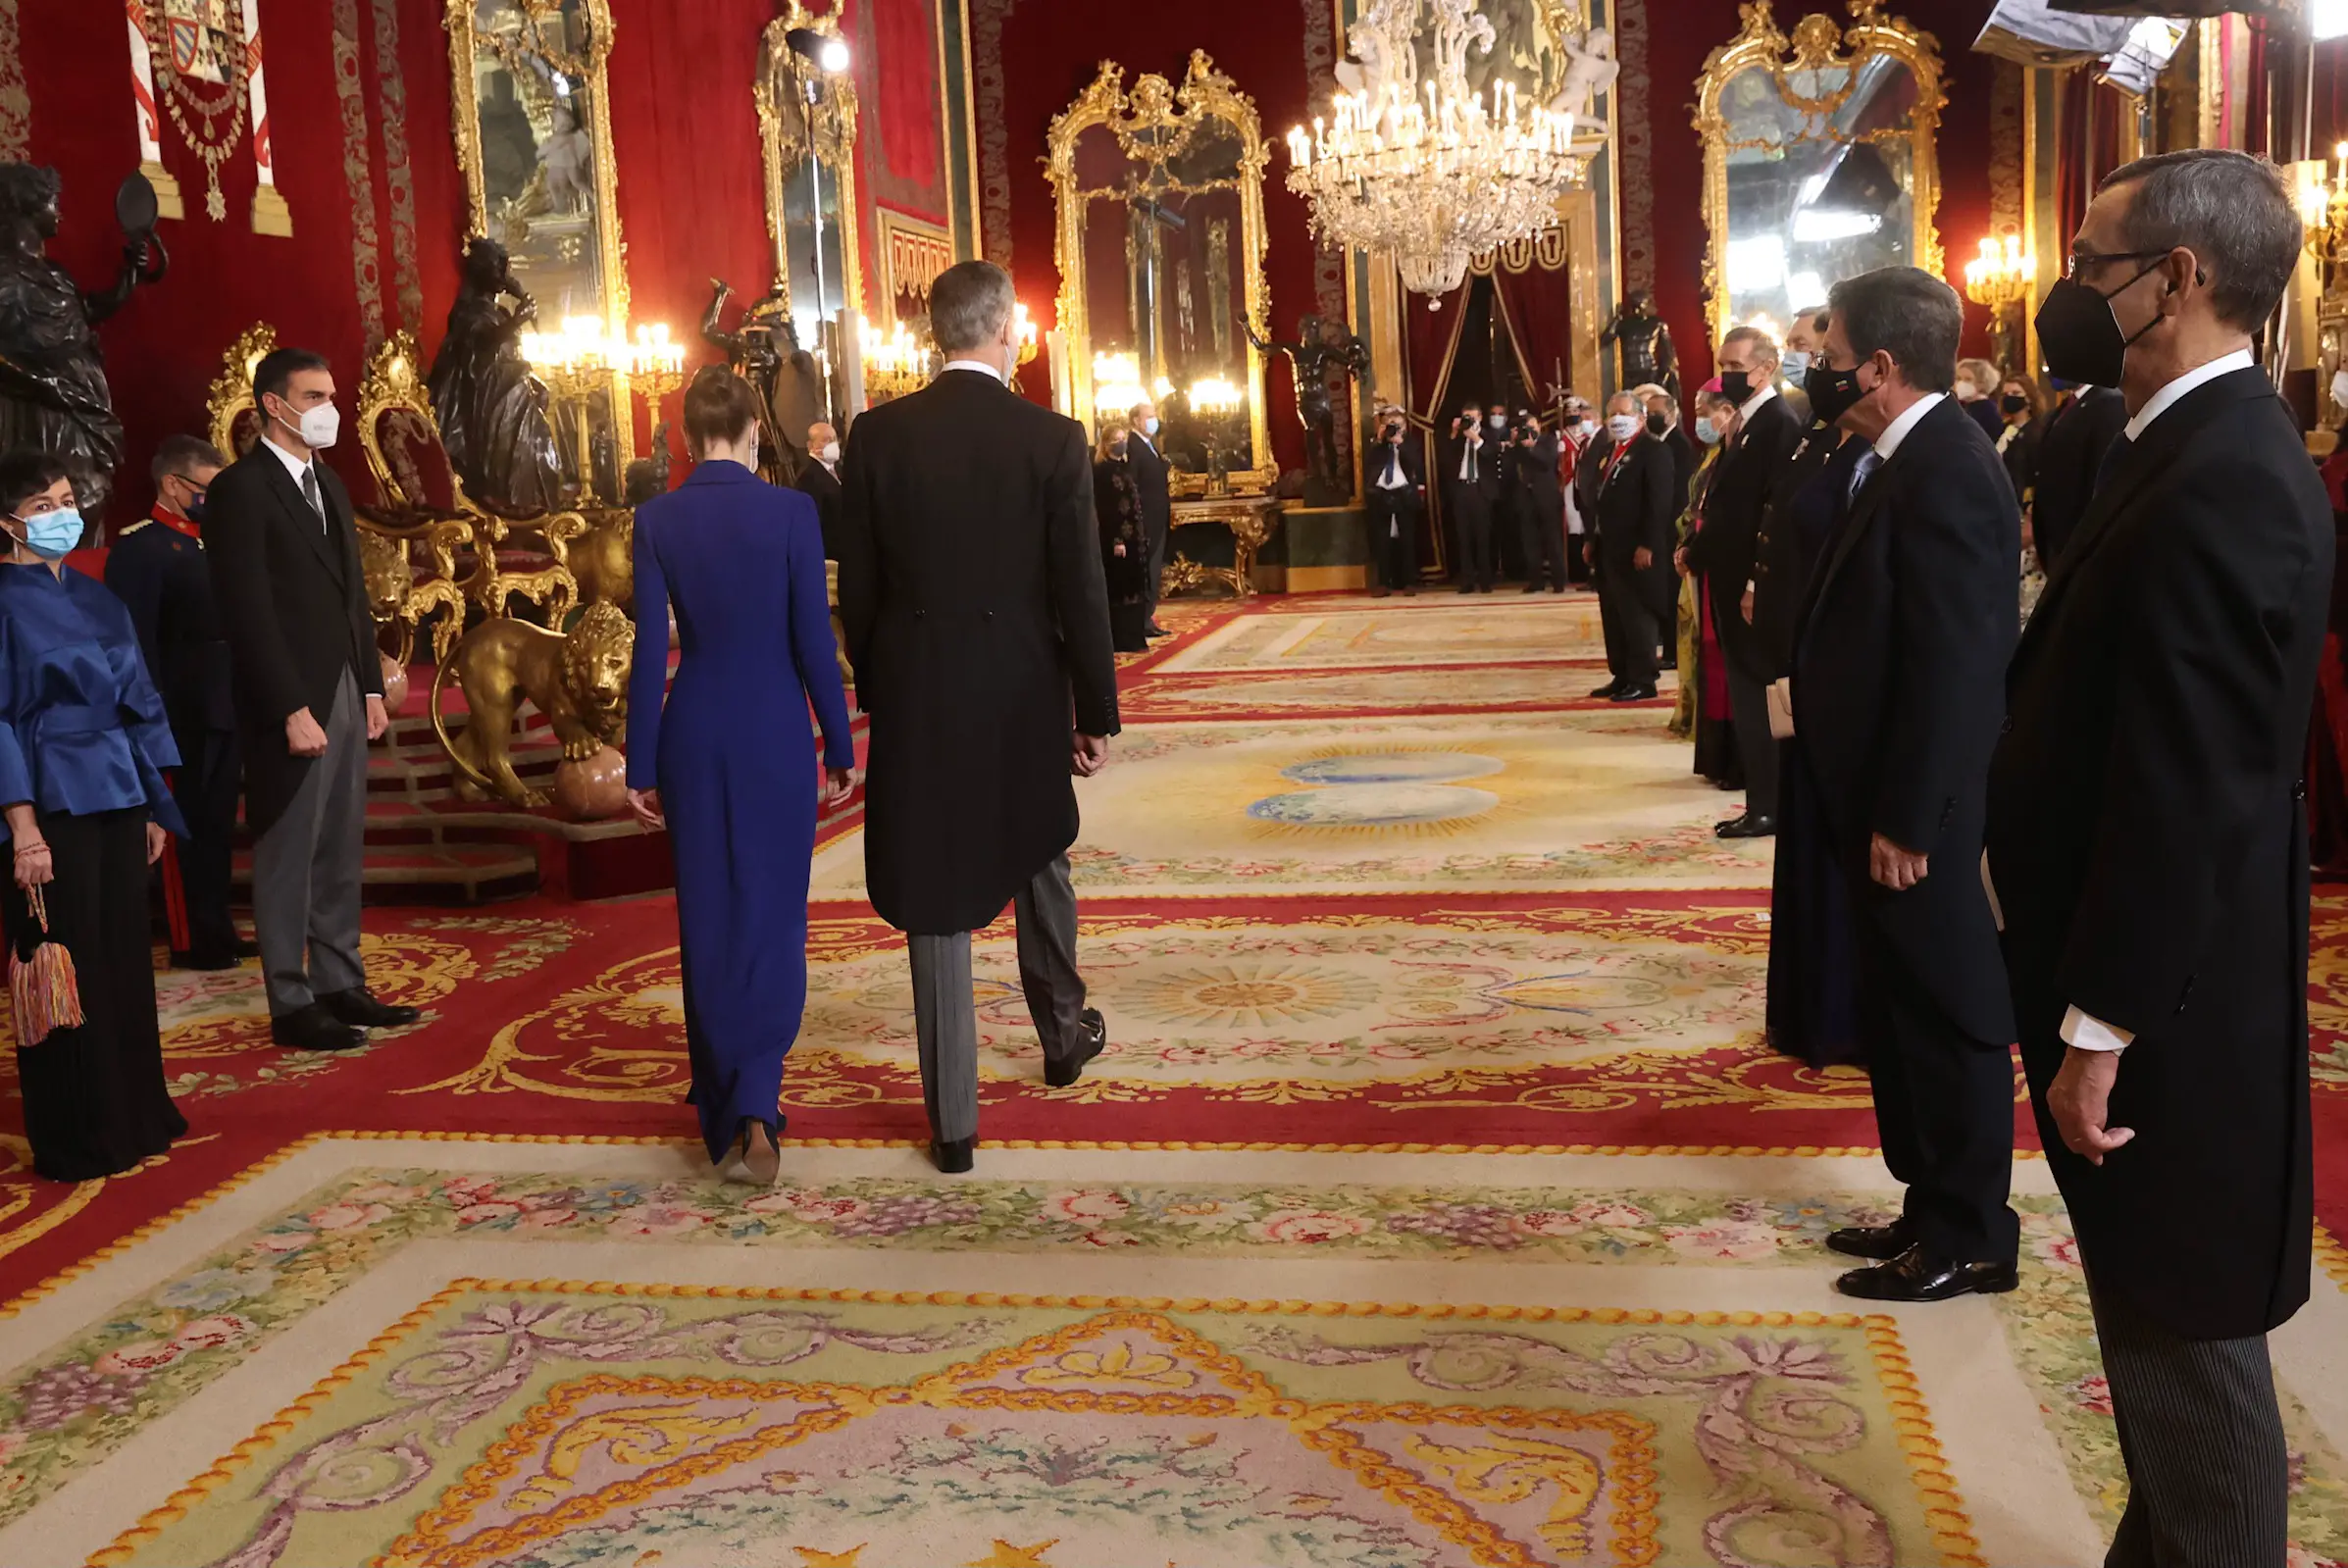 Queen Letizia wore blue maxi wrap dress at the 2021 Diplomatic Reception